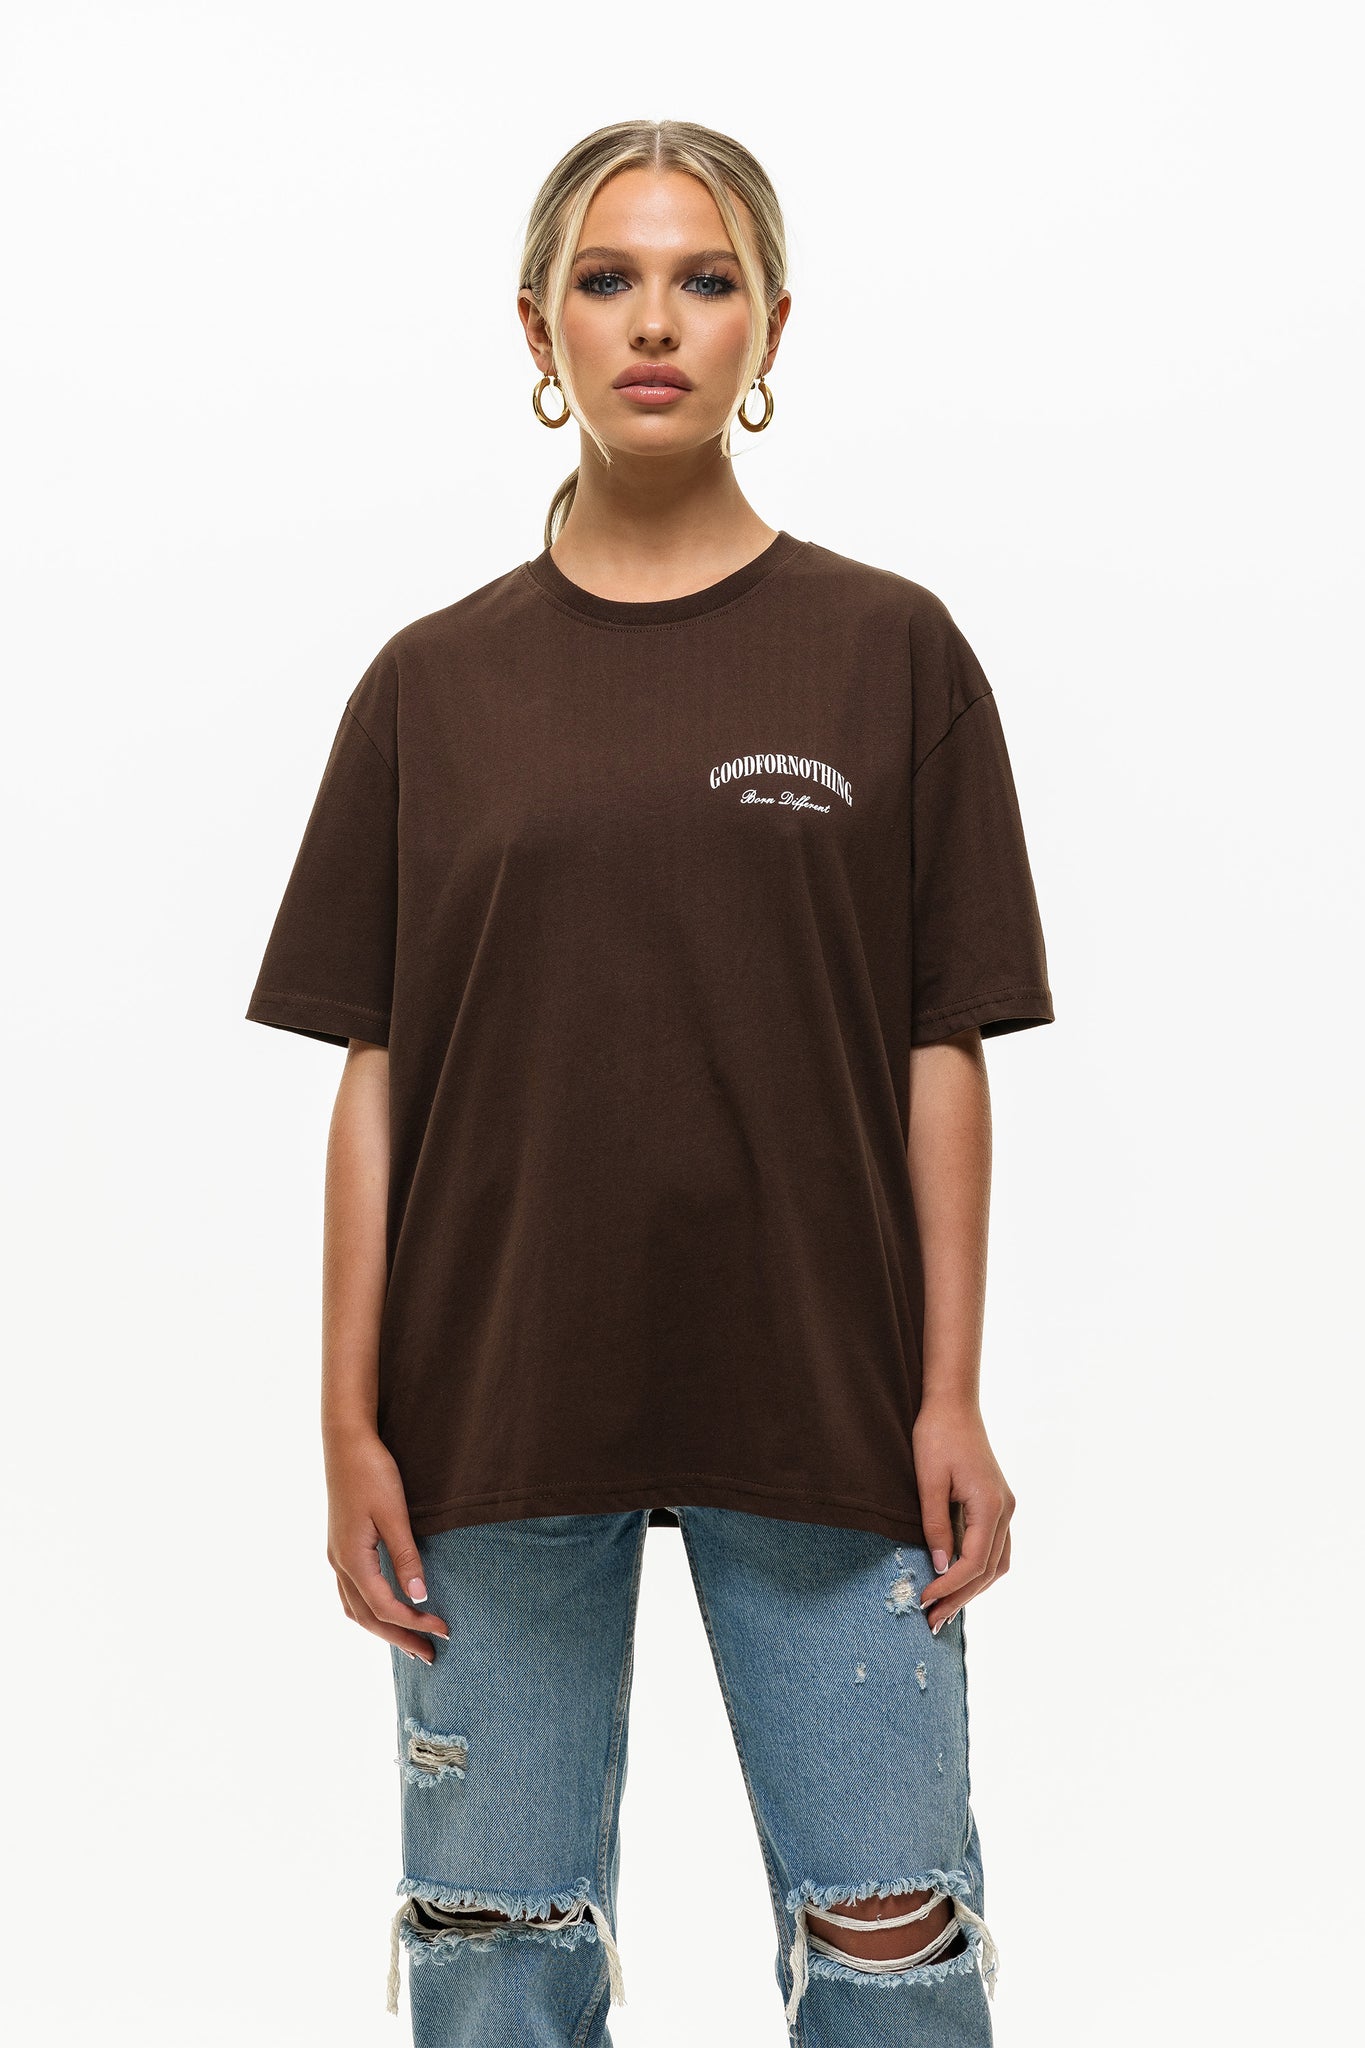 Heritage Brown T-shirt